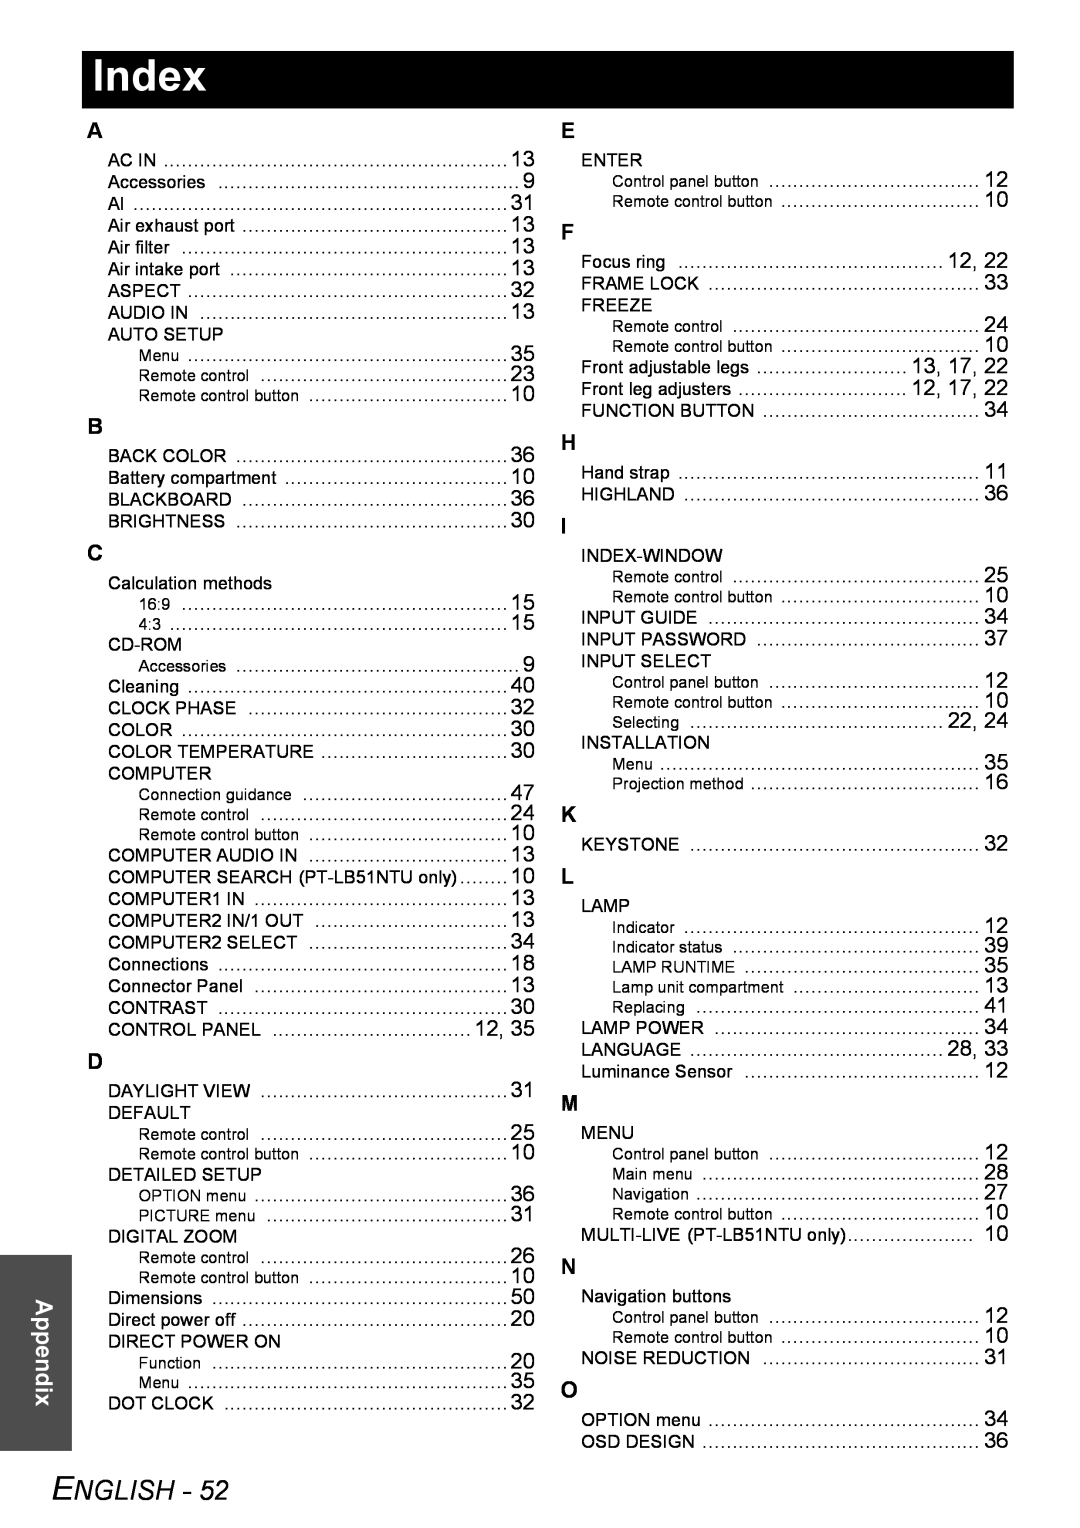 Philips PT-LB51SU manual Index, English, Appendix 